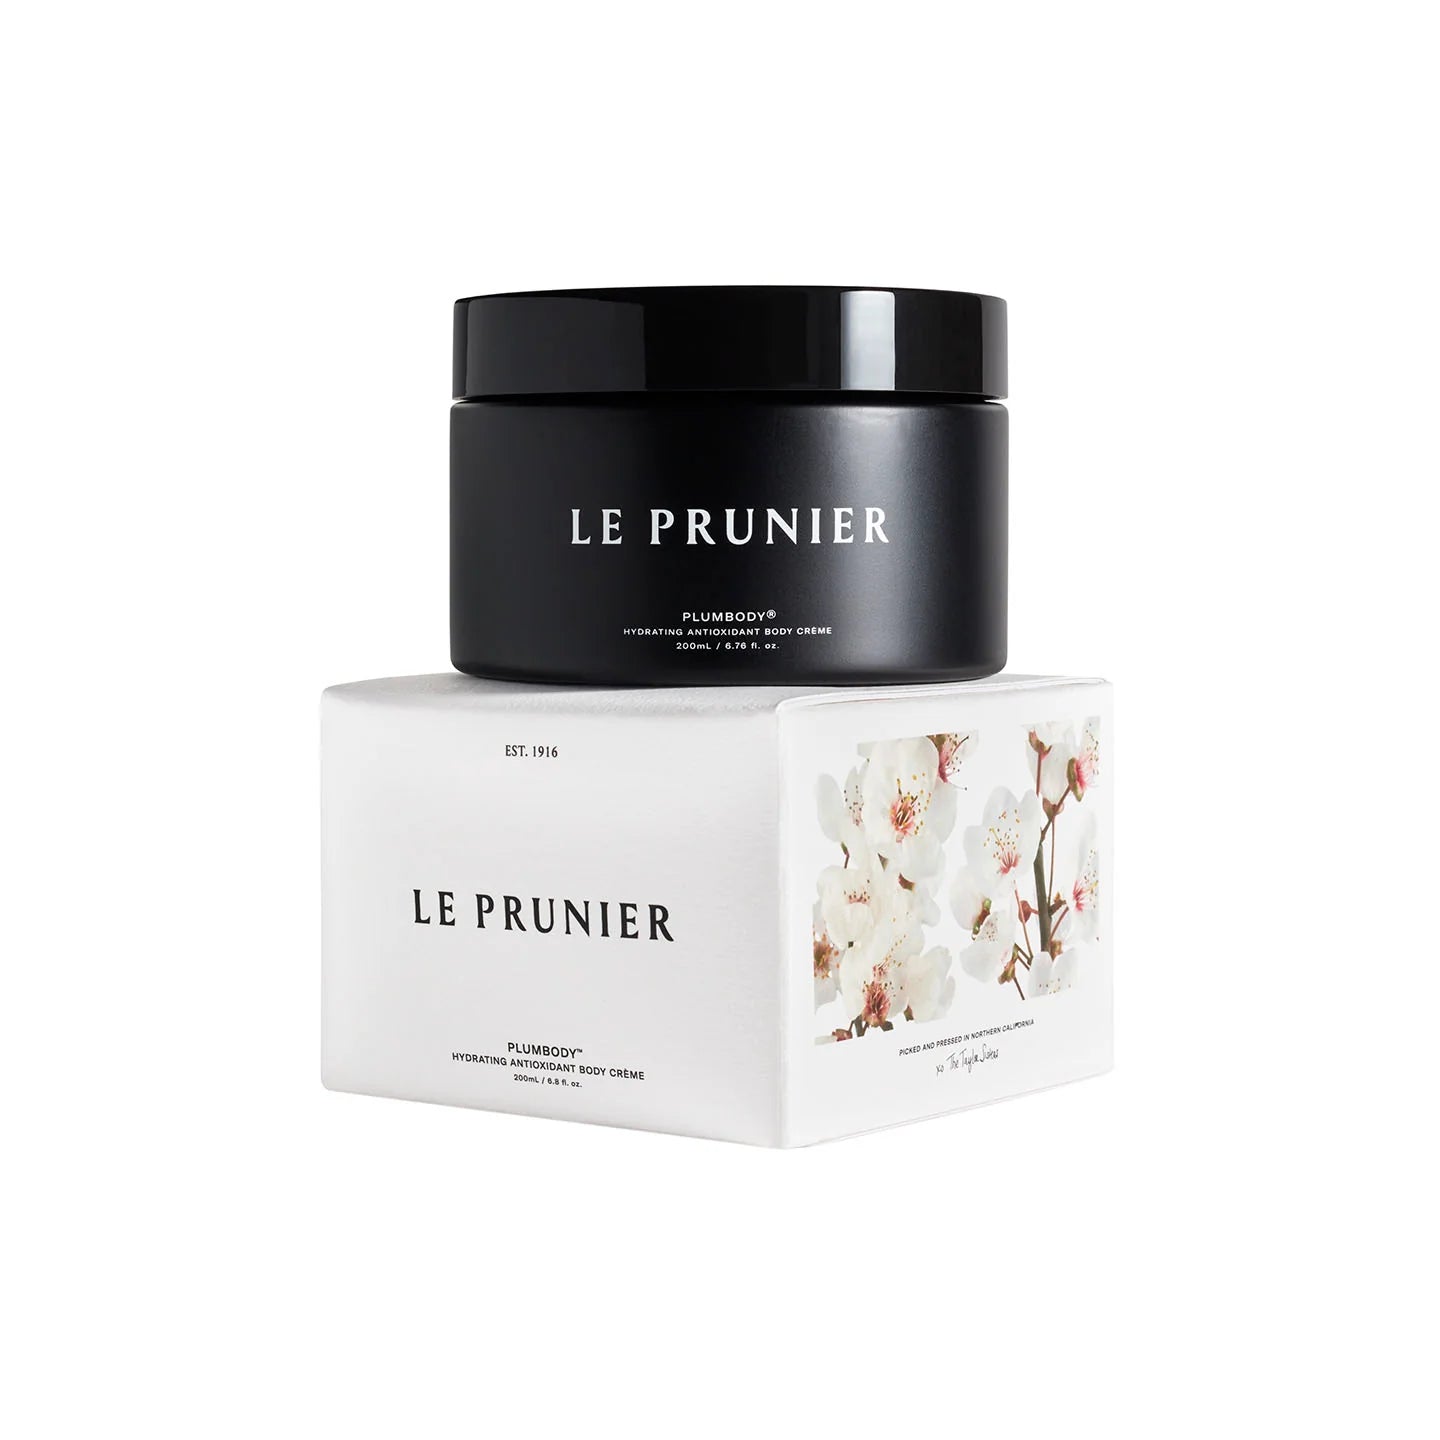 Le Prunier Plumbody™ Hydrating Antioxidant Body Creme